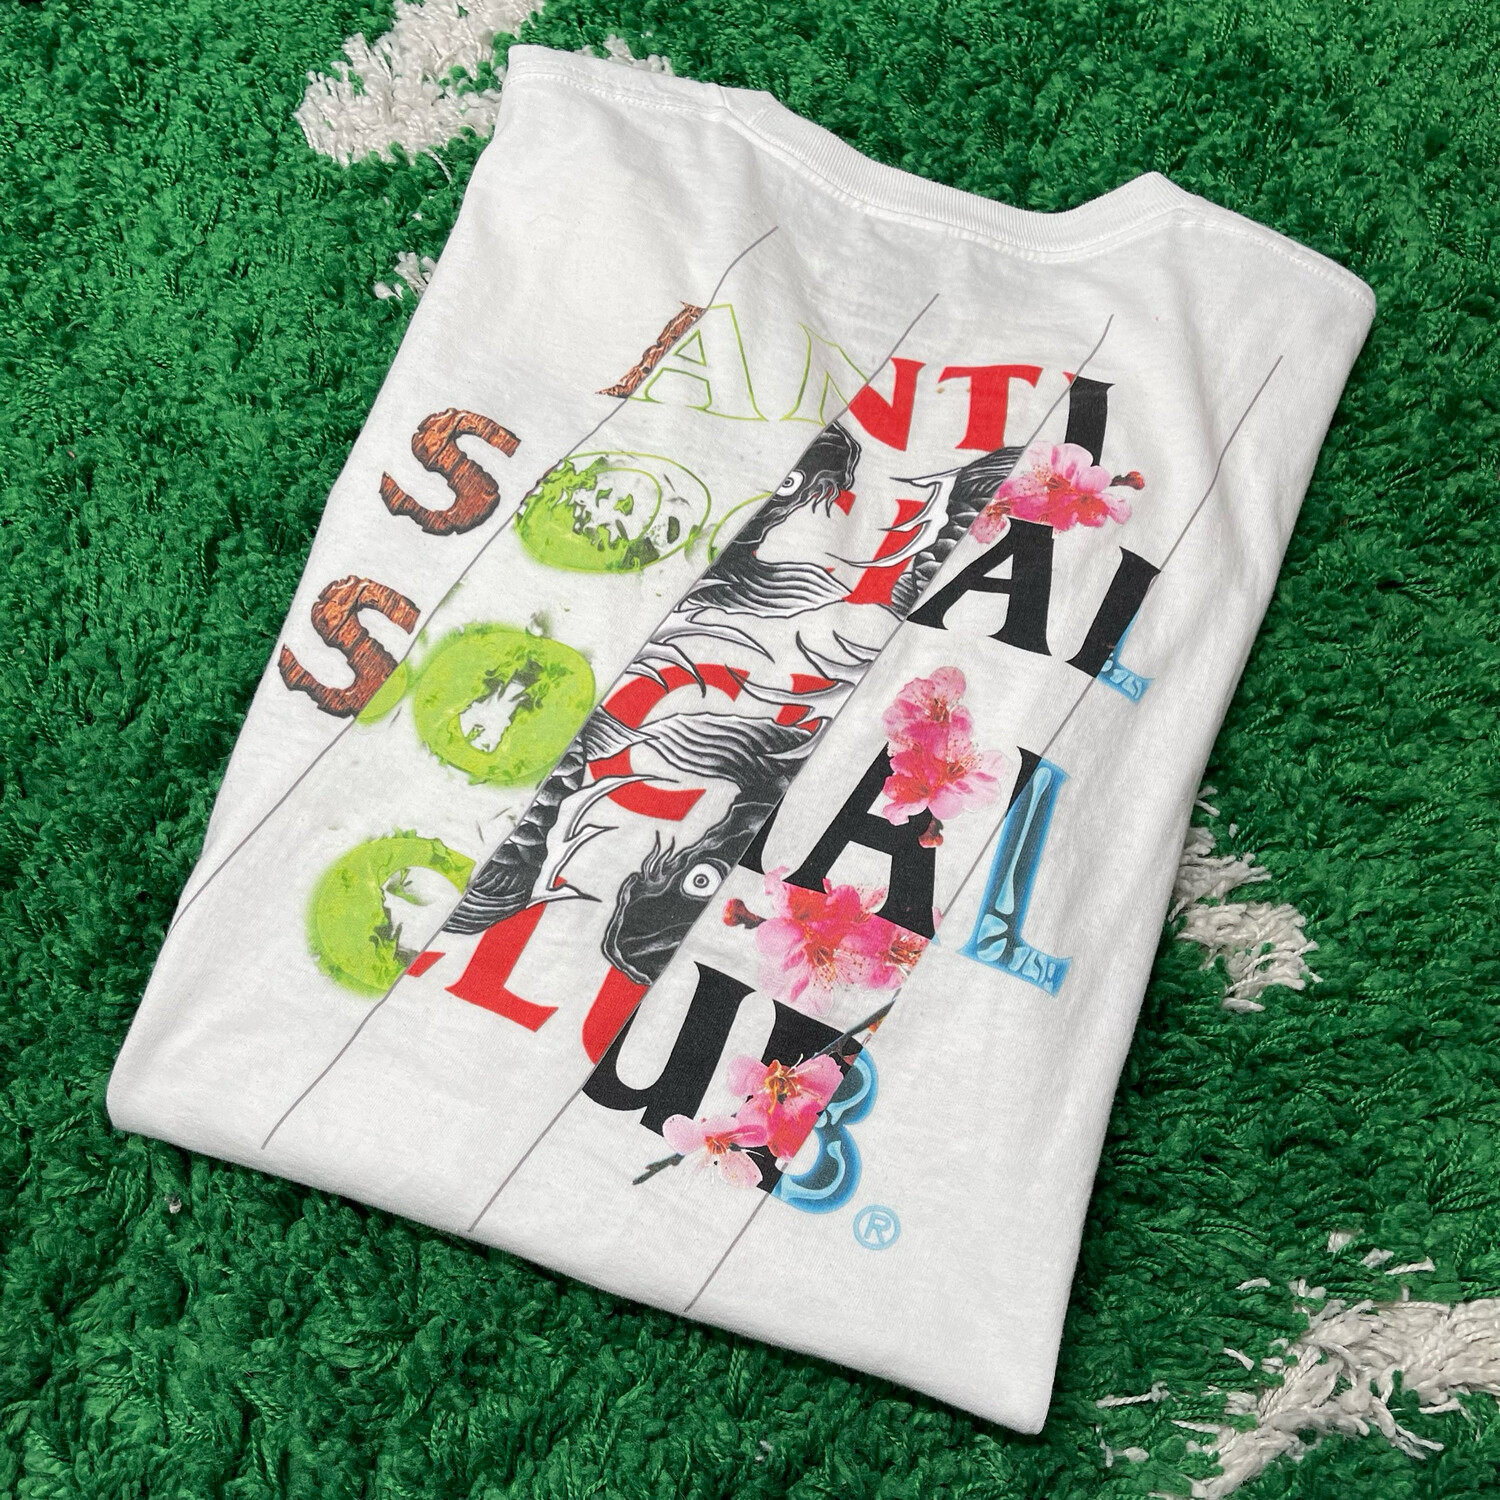 Anti Social Social Club Mixed Logo White Tee Size XL